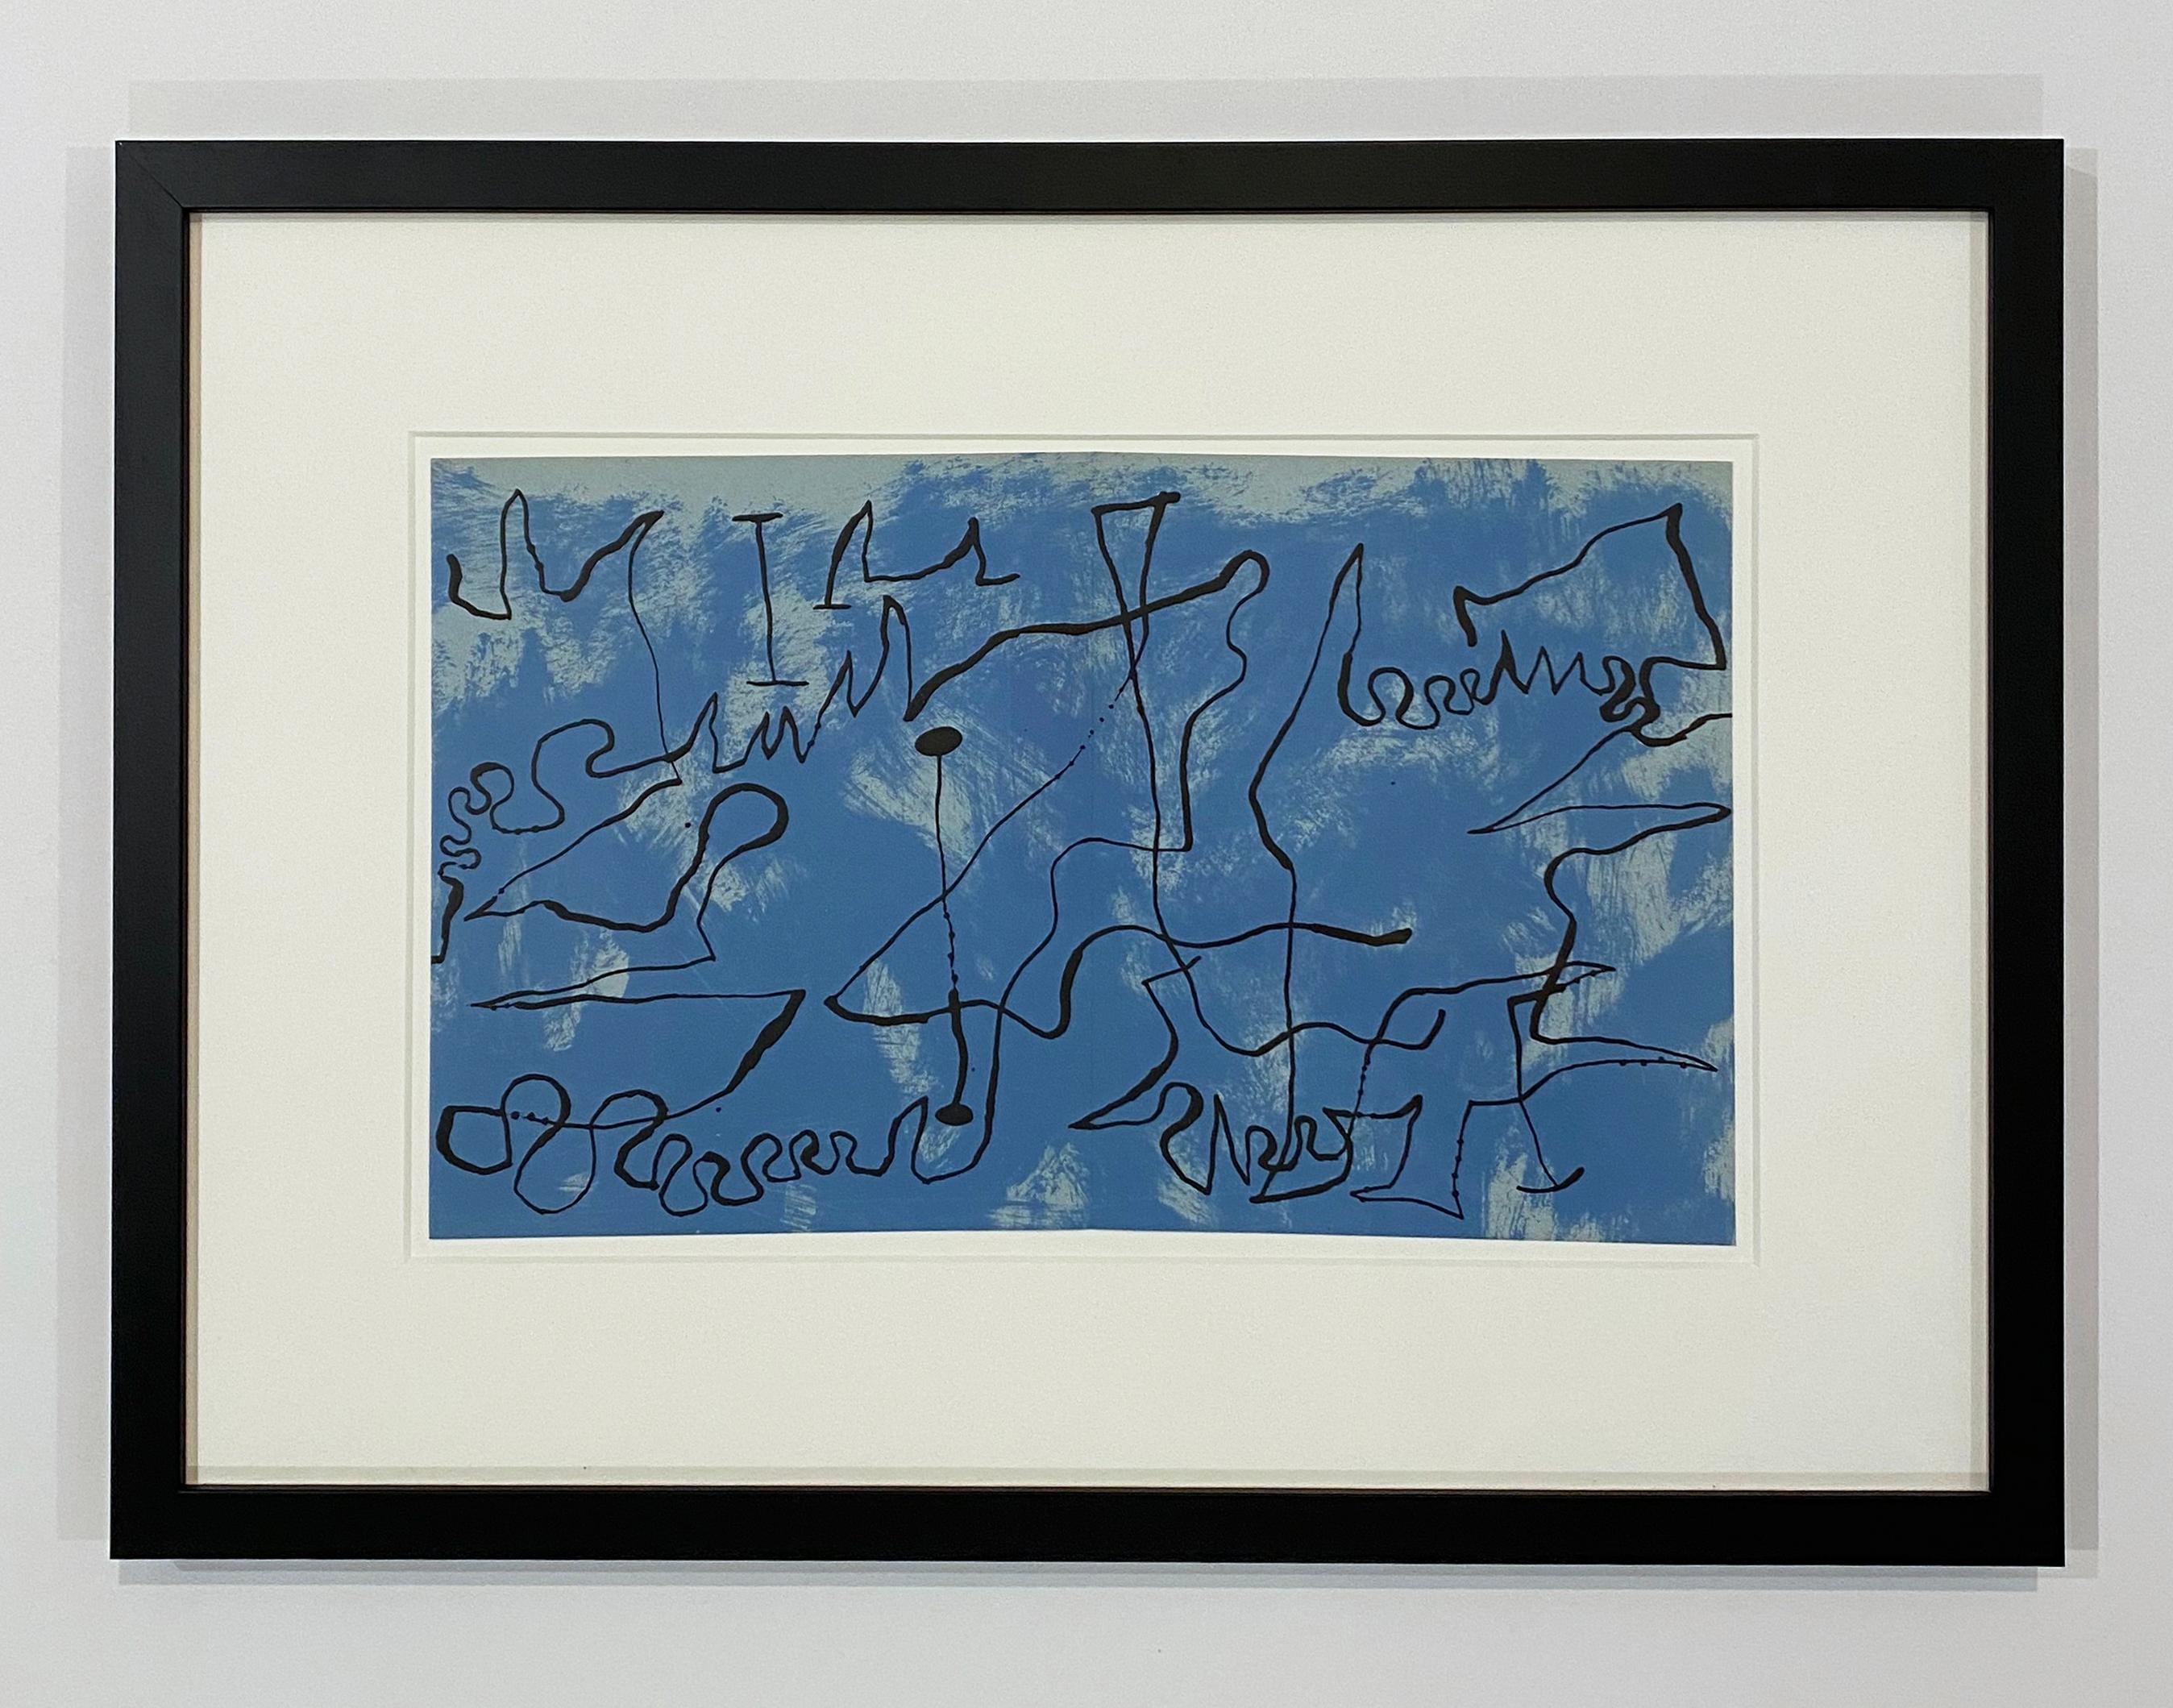 Joan Miro (Plate 3) - Print by Joan Miró